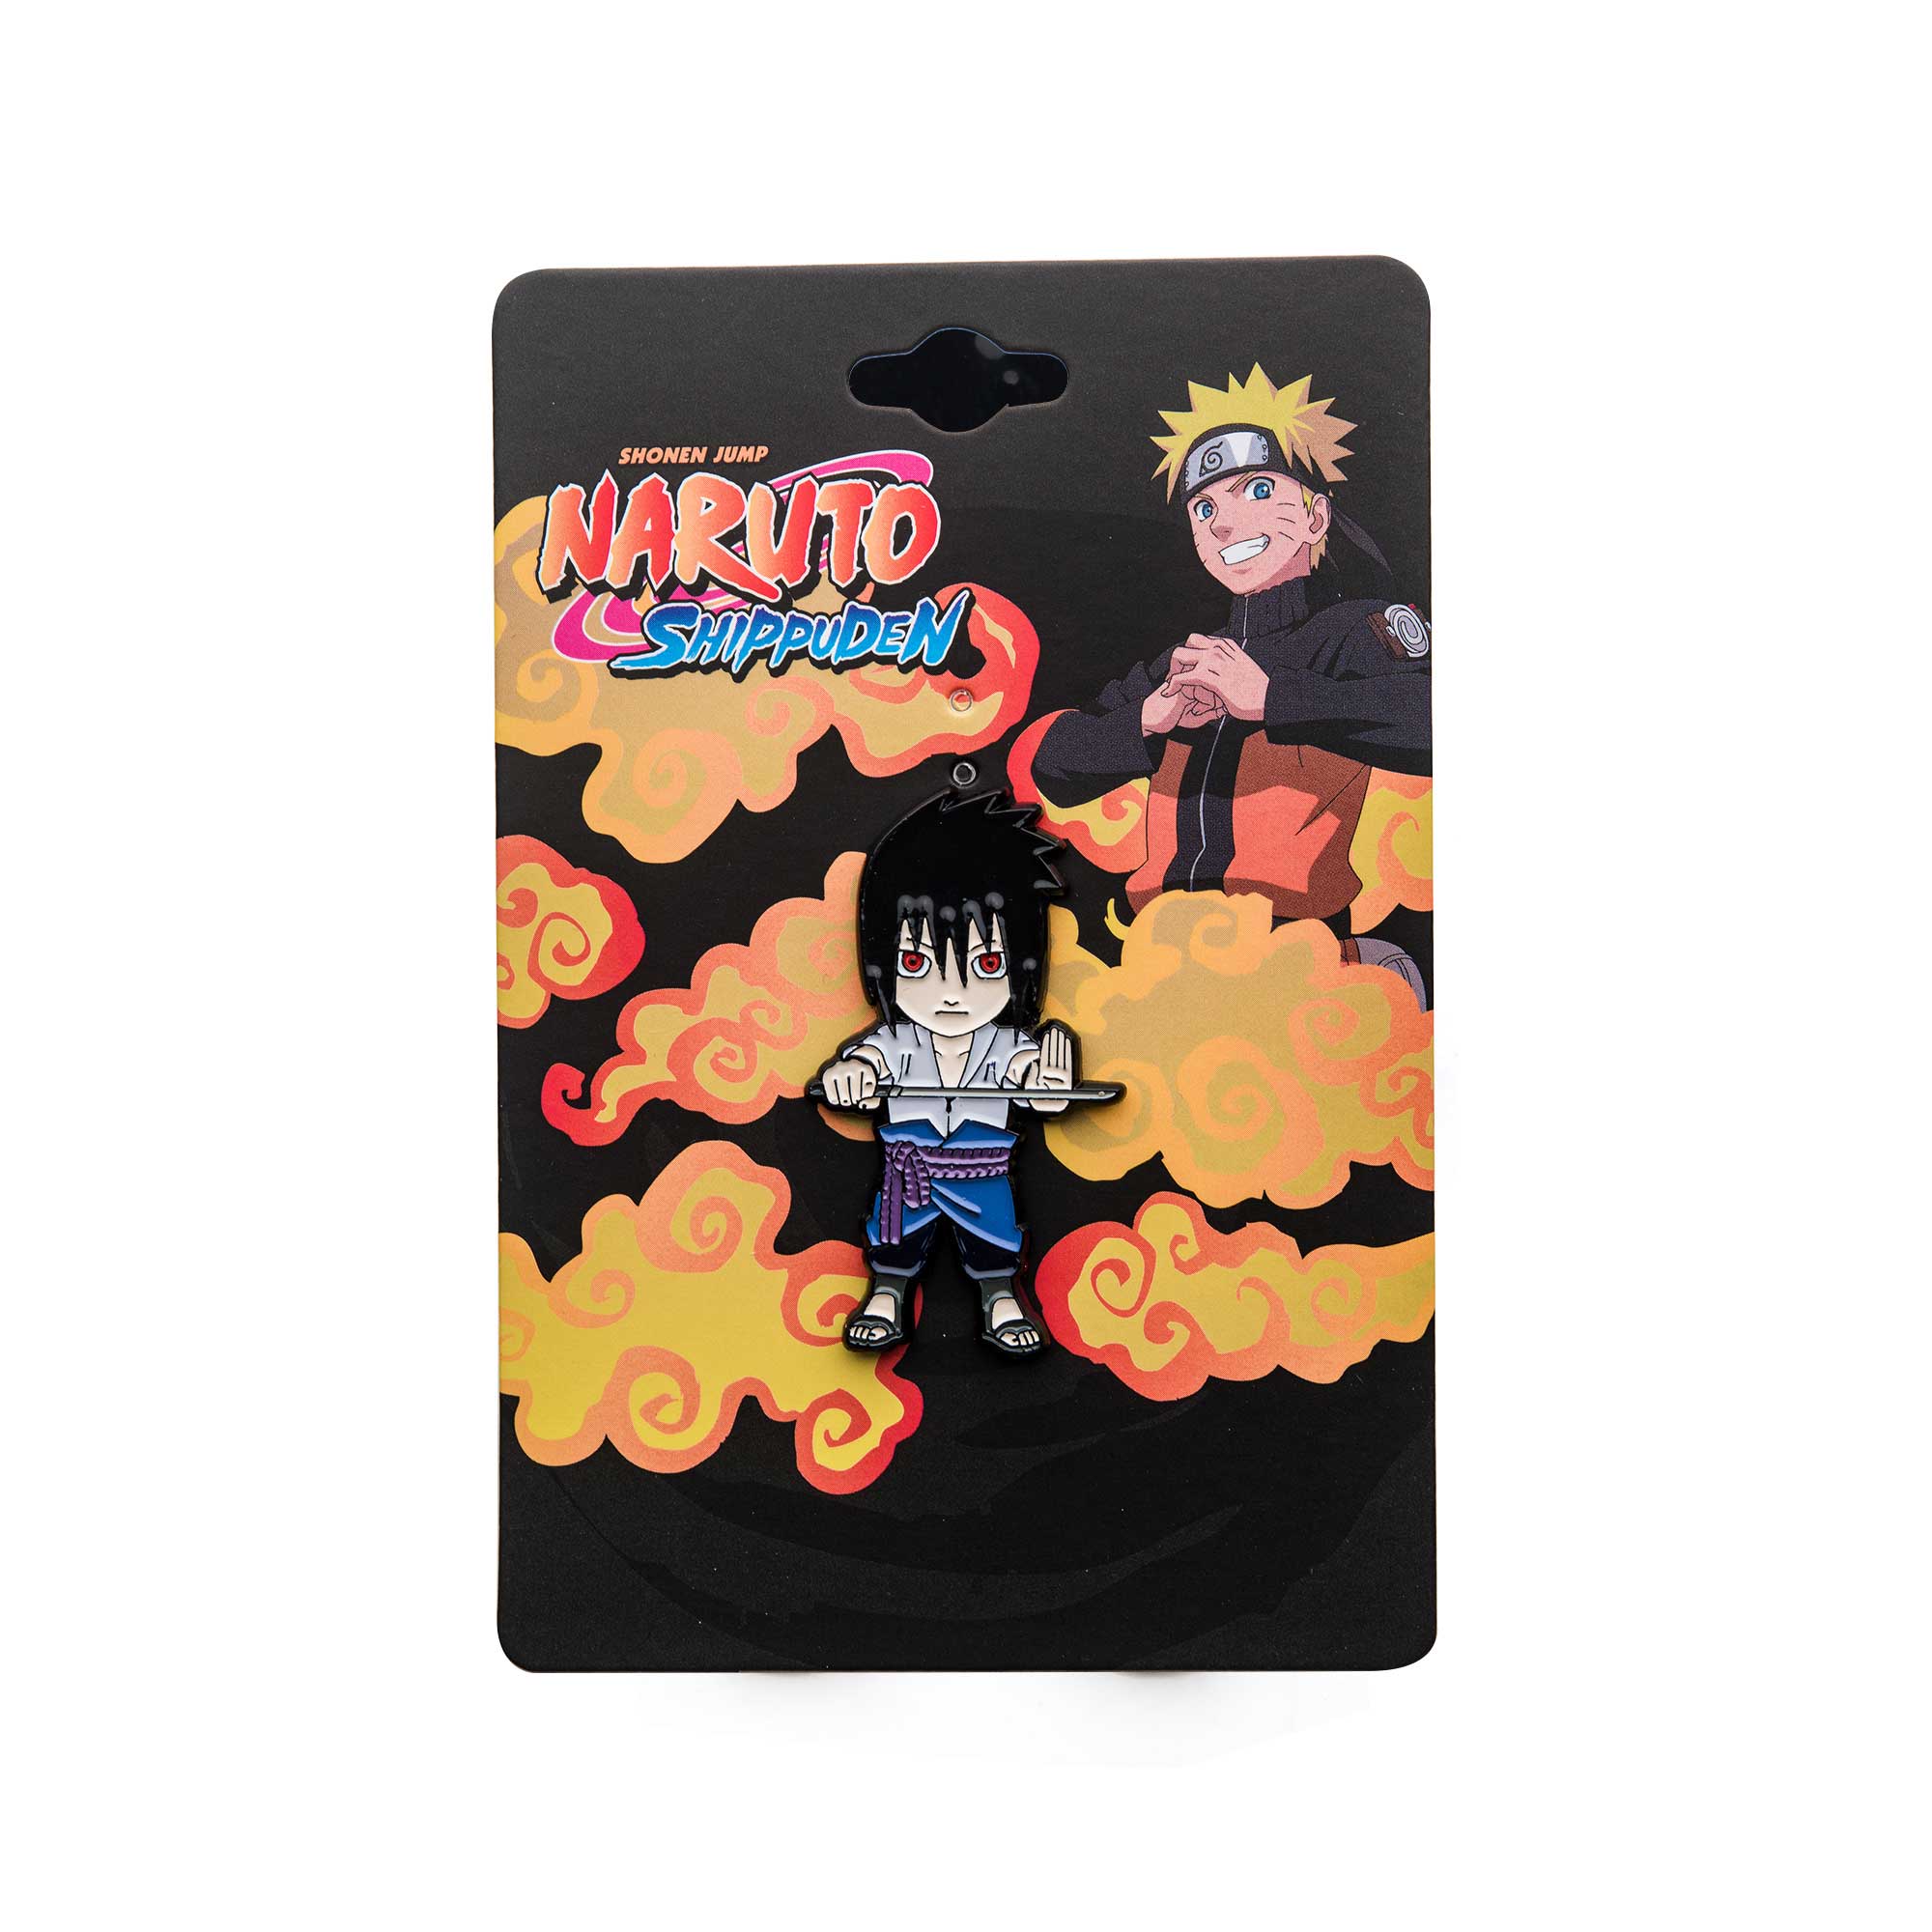 Naruto Shippuden Chibi Sasuke Lapel Pin